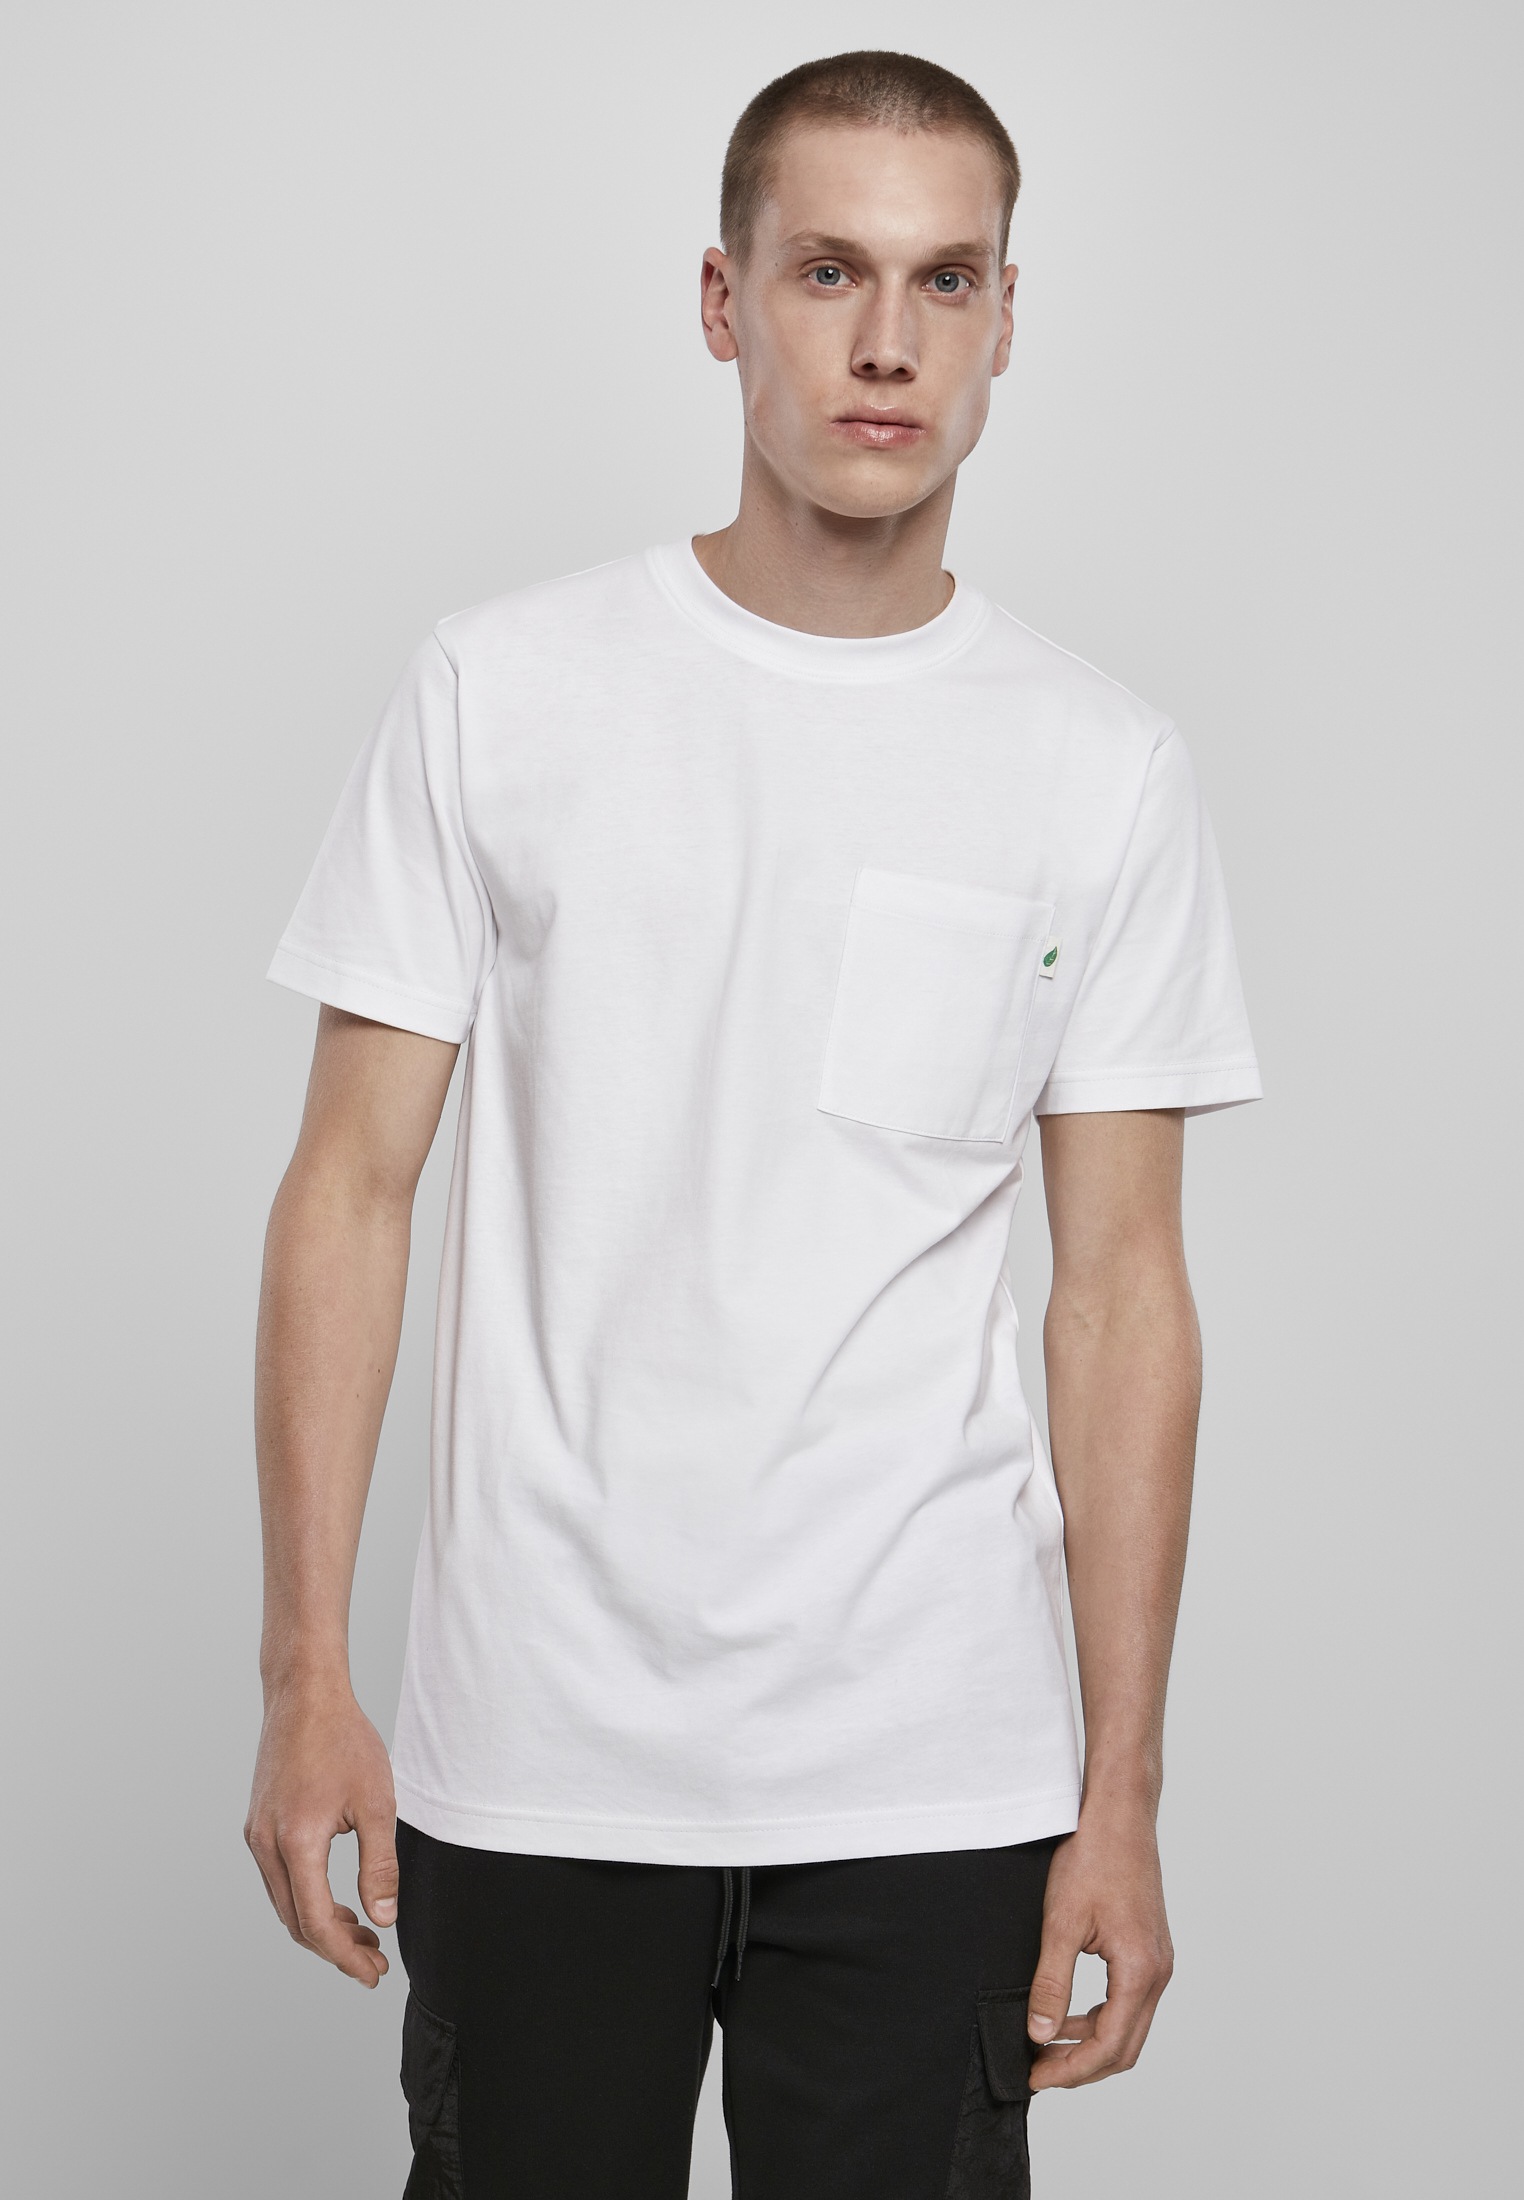 online Basic CLASSICS Pocket tlg.) »Herren Cotton T-Shirt (1 2-Pack«, Tee URBAN Organic bei